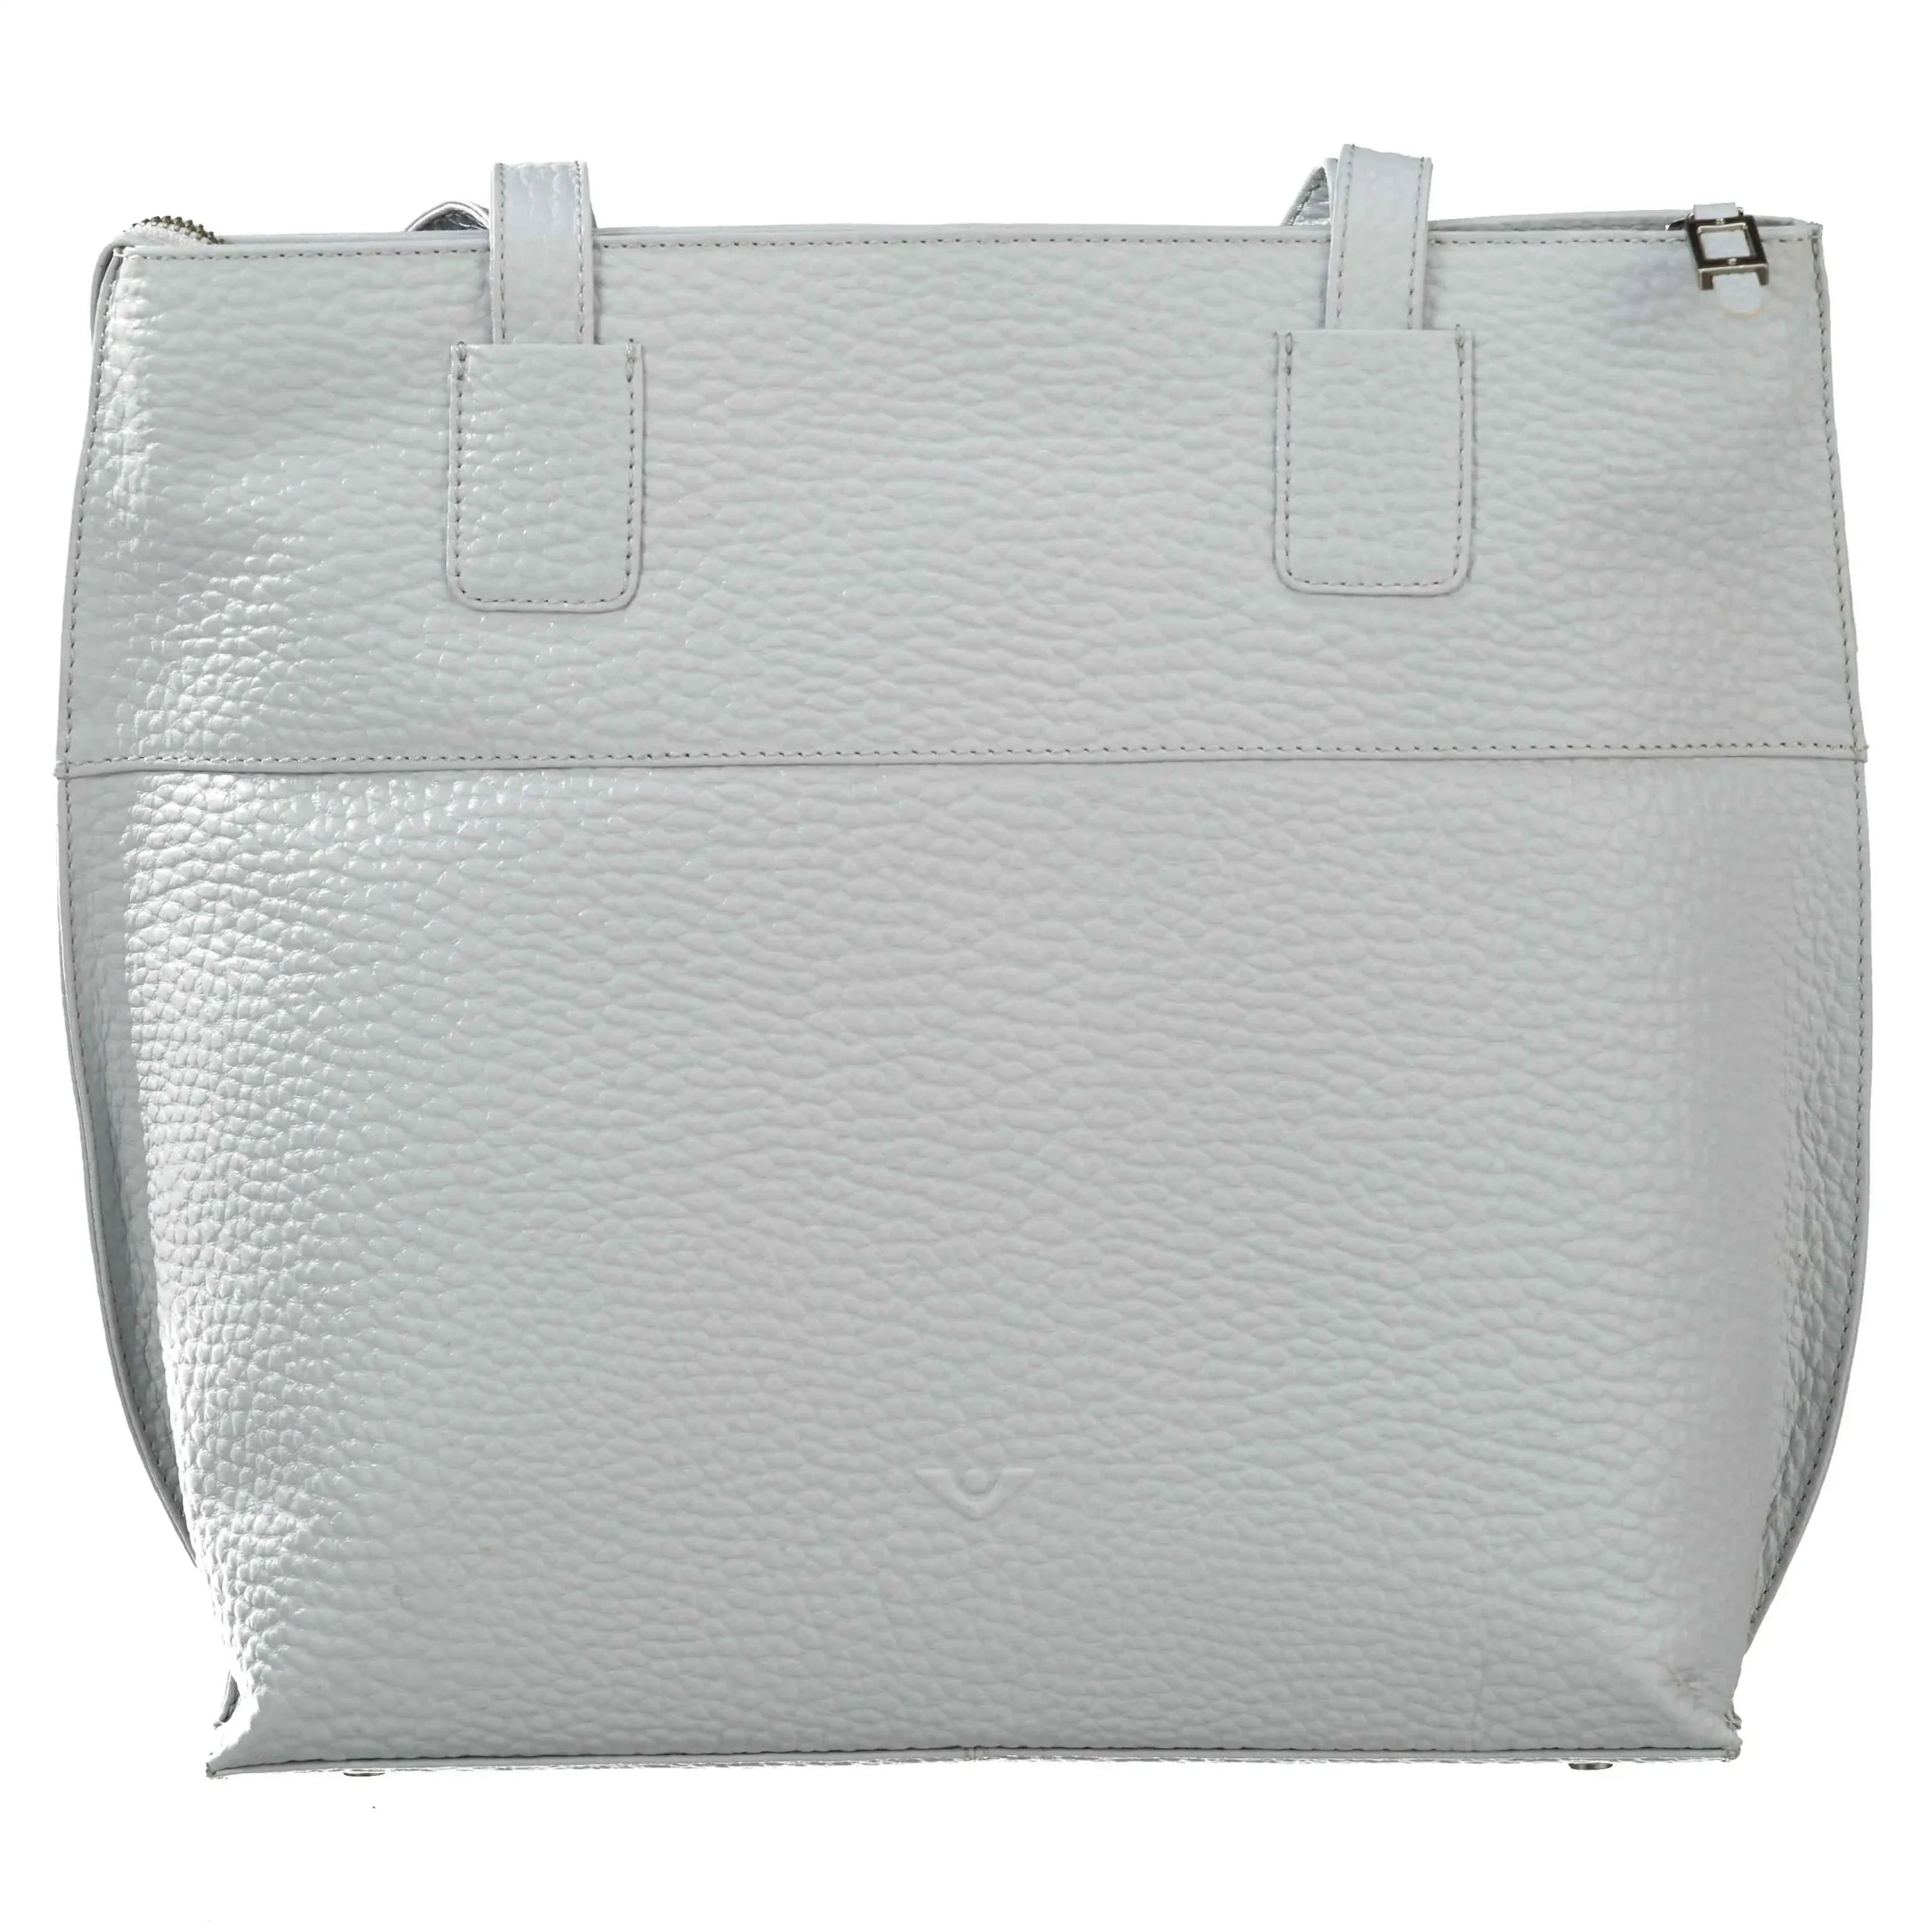 VOi-Design Hirsch Giuliana shoulder bag 39 cm - Platinum